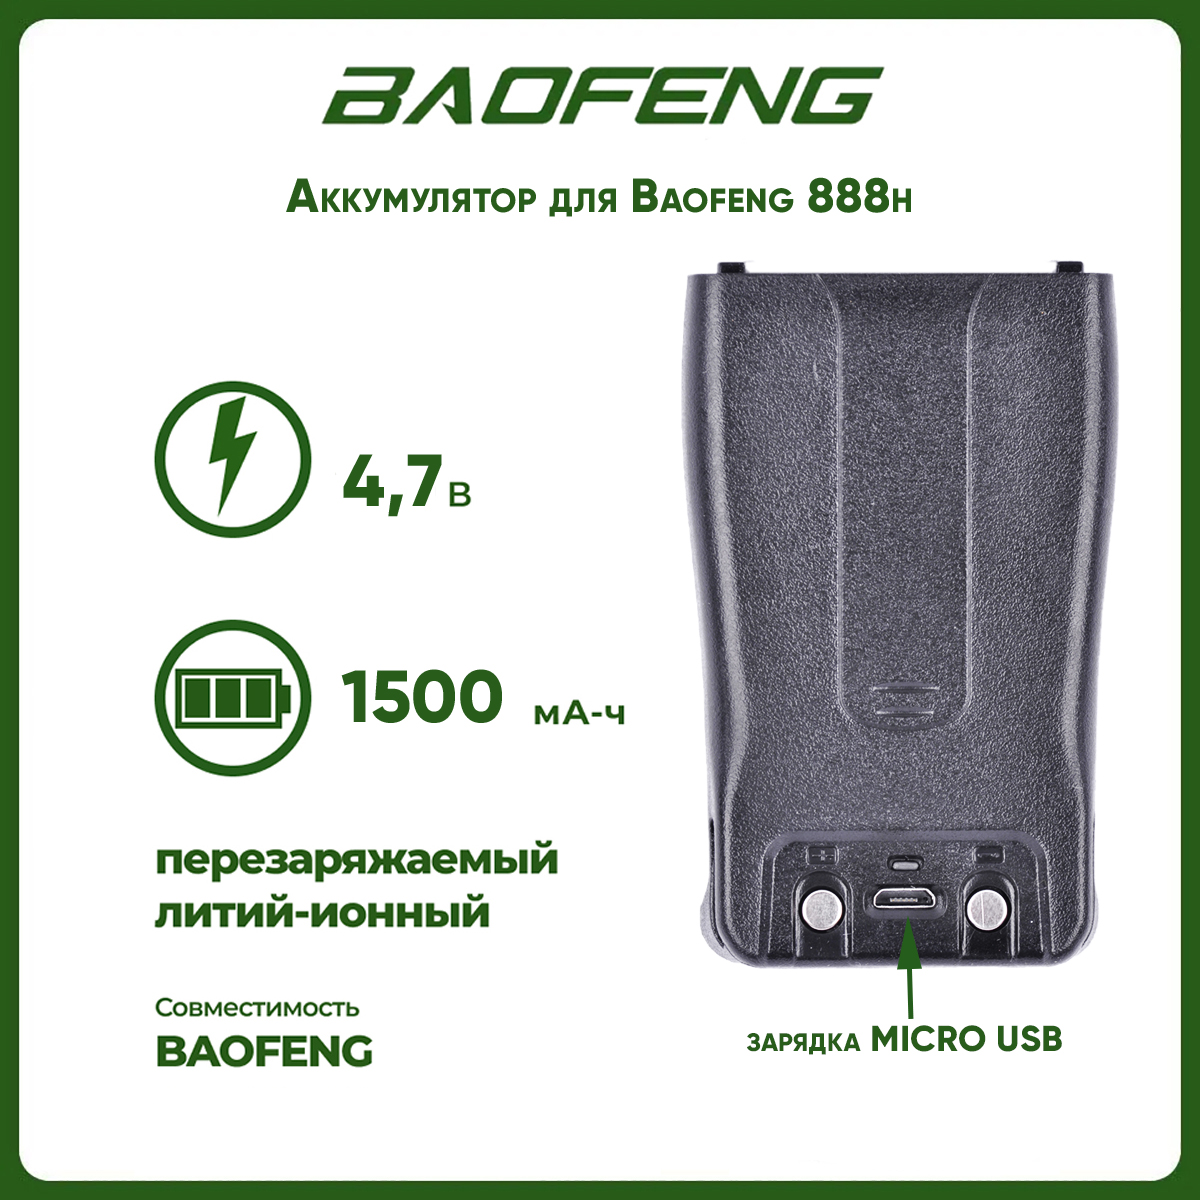 Аккумулятор для рации Baofeng 888h, 1500 mAh